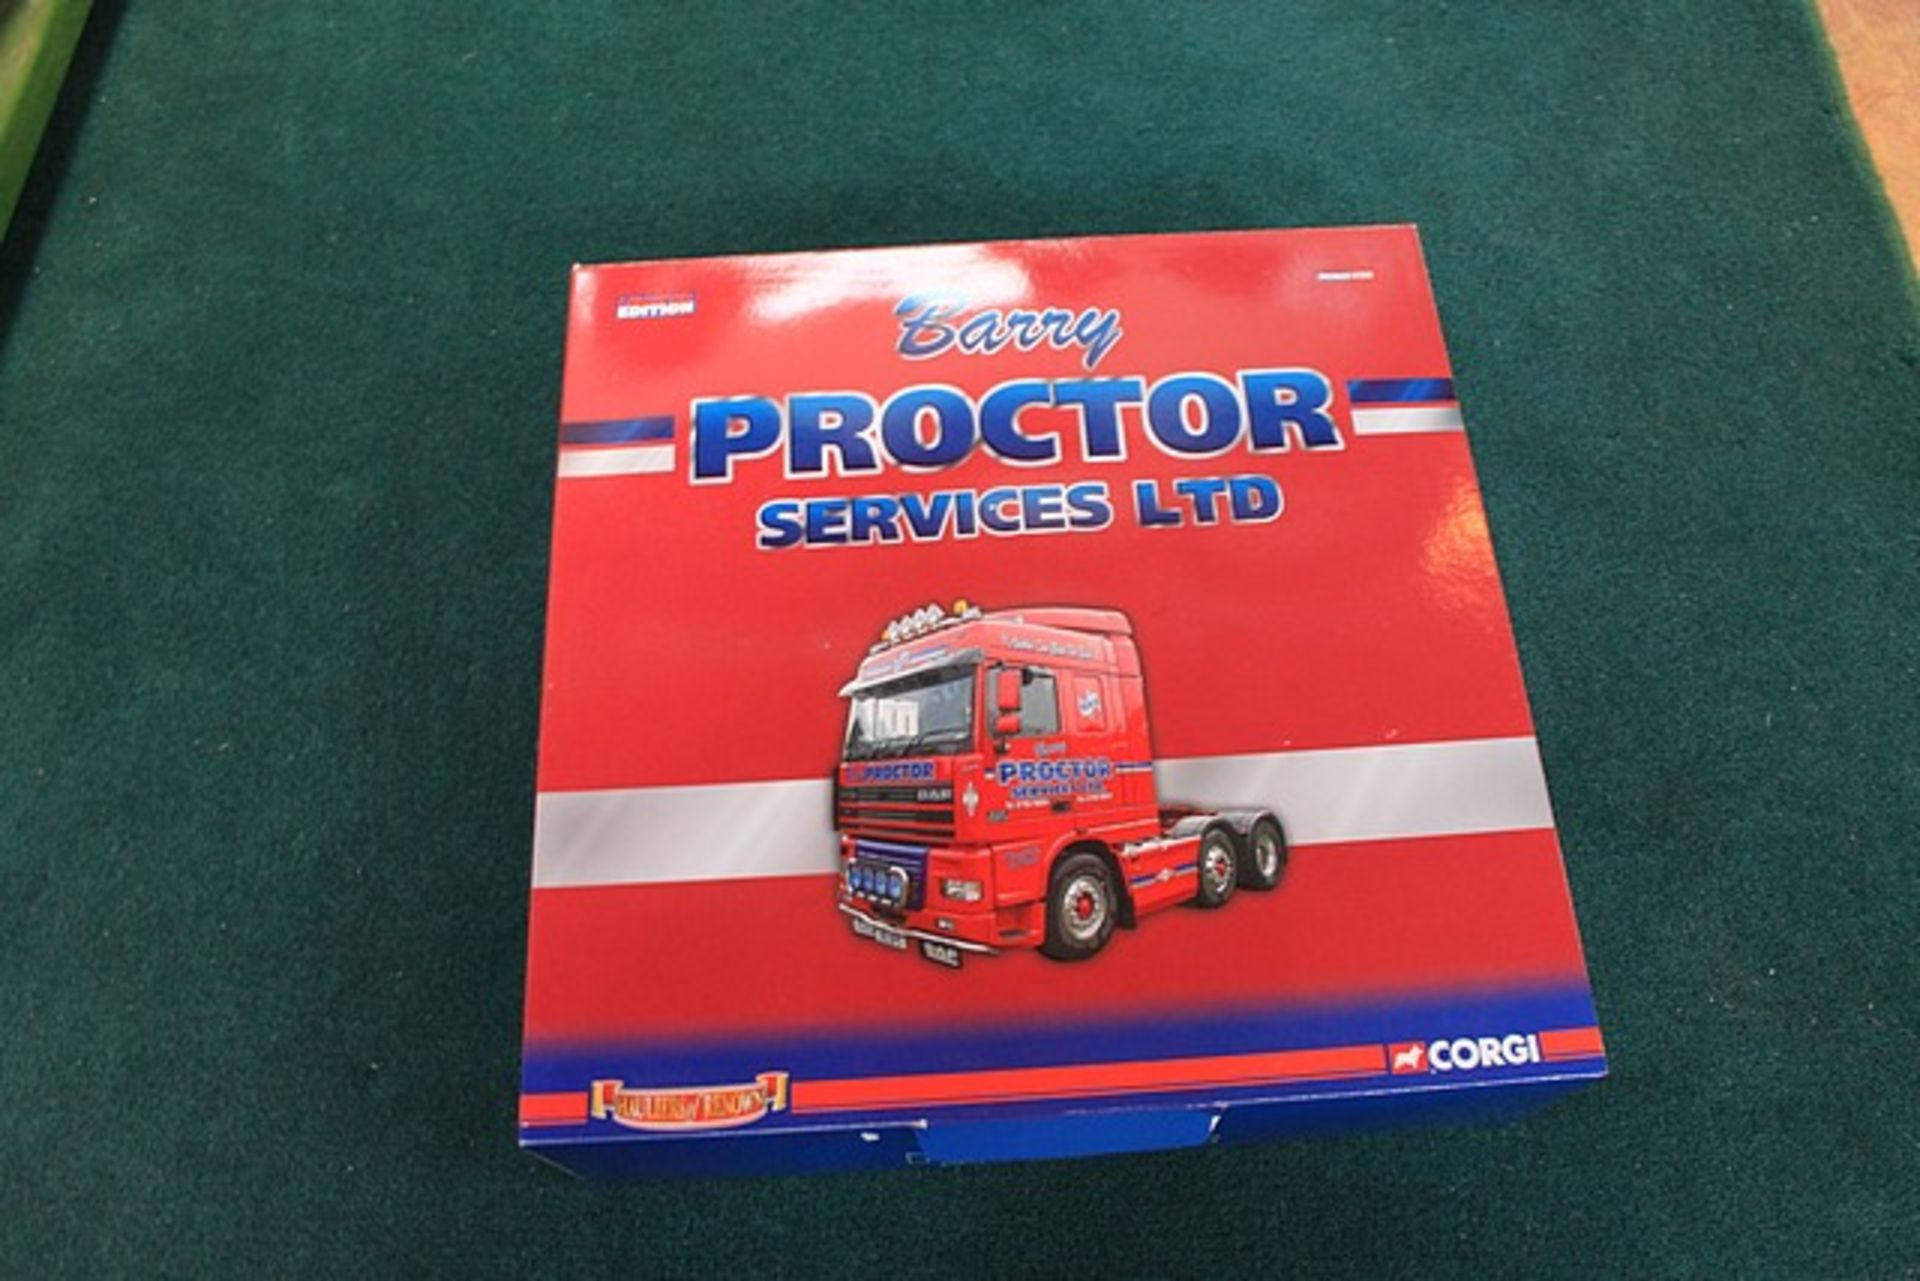 CORGI #CC99169 Limited Edition Barry Proctor Set 1/50 Scale The Set -- Scania Topline Sided Crane - Image 2 of 2